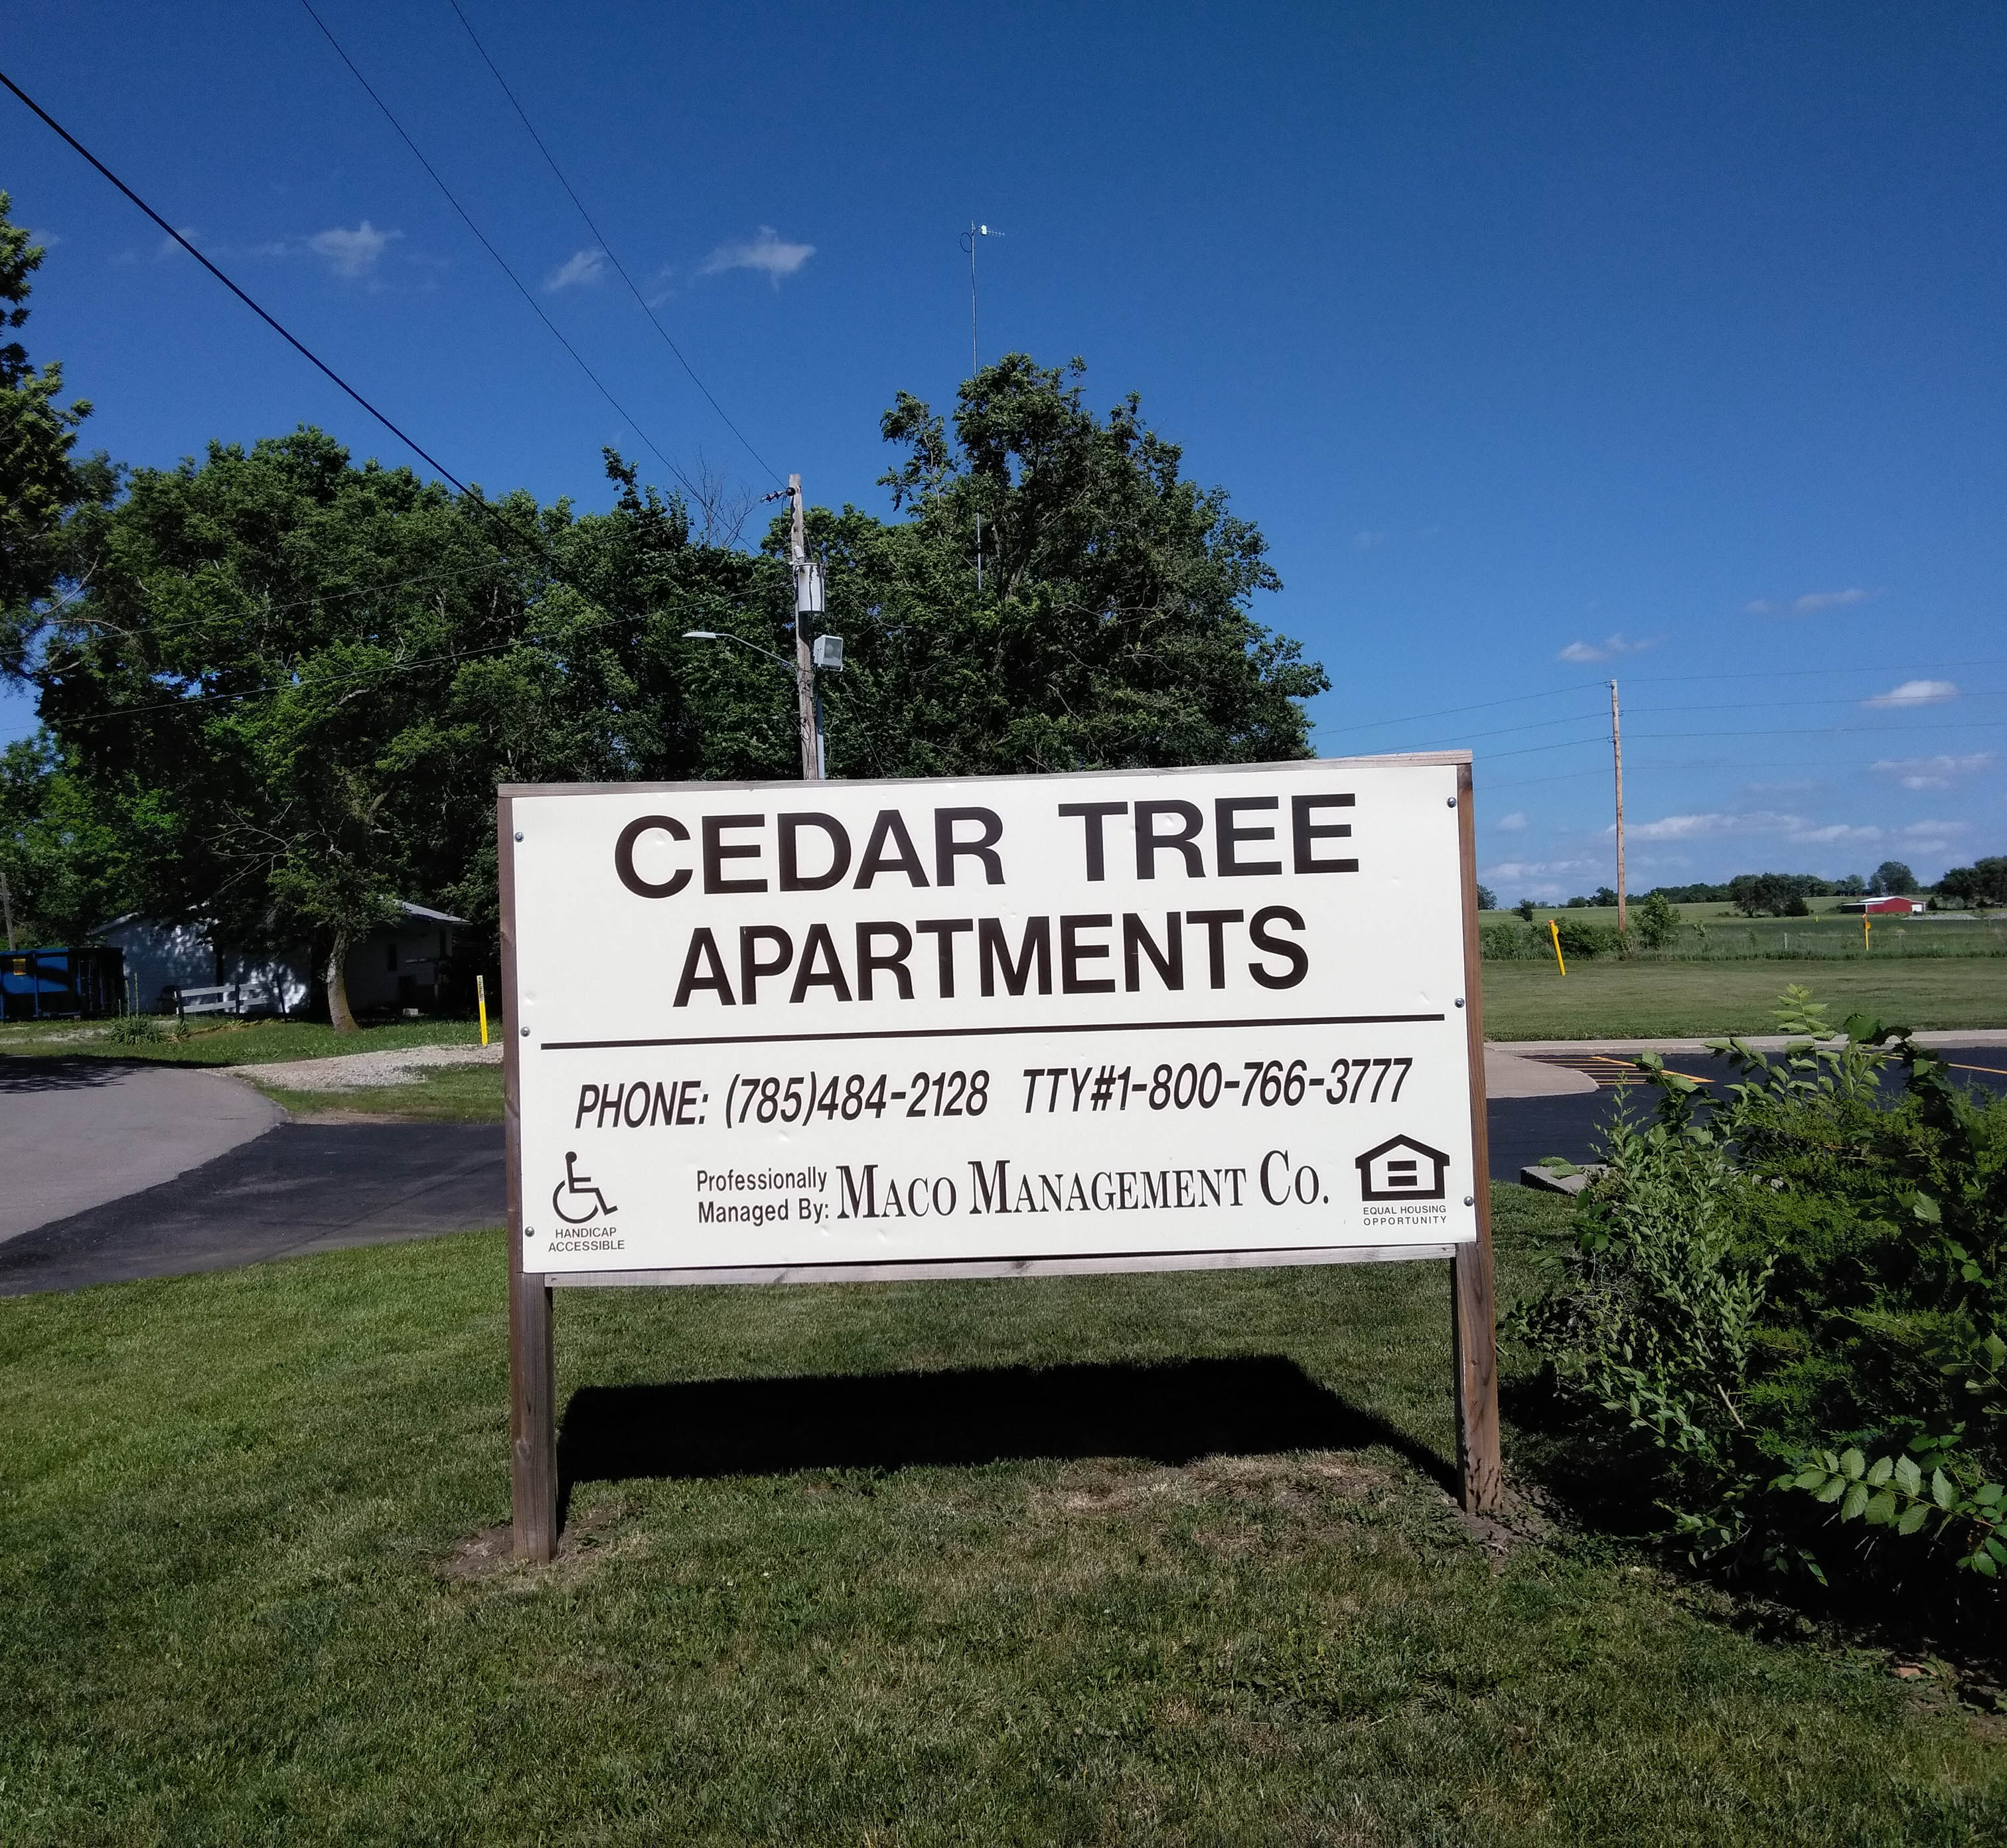 CEDAR TREE APARTMENTS